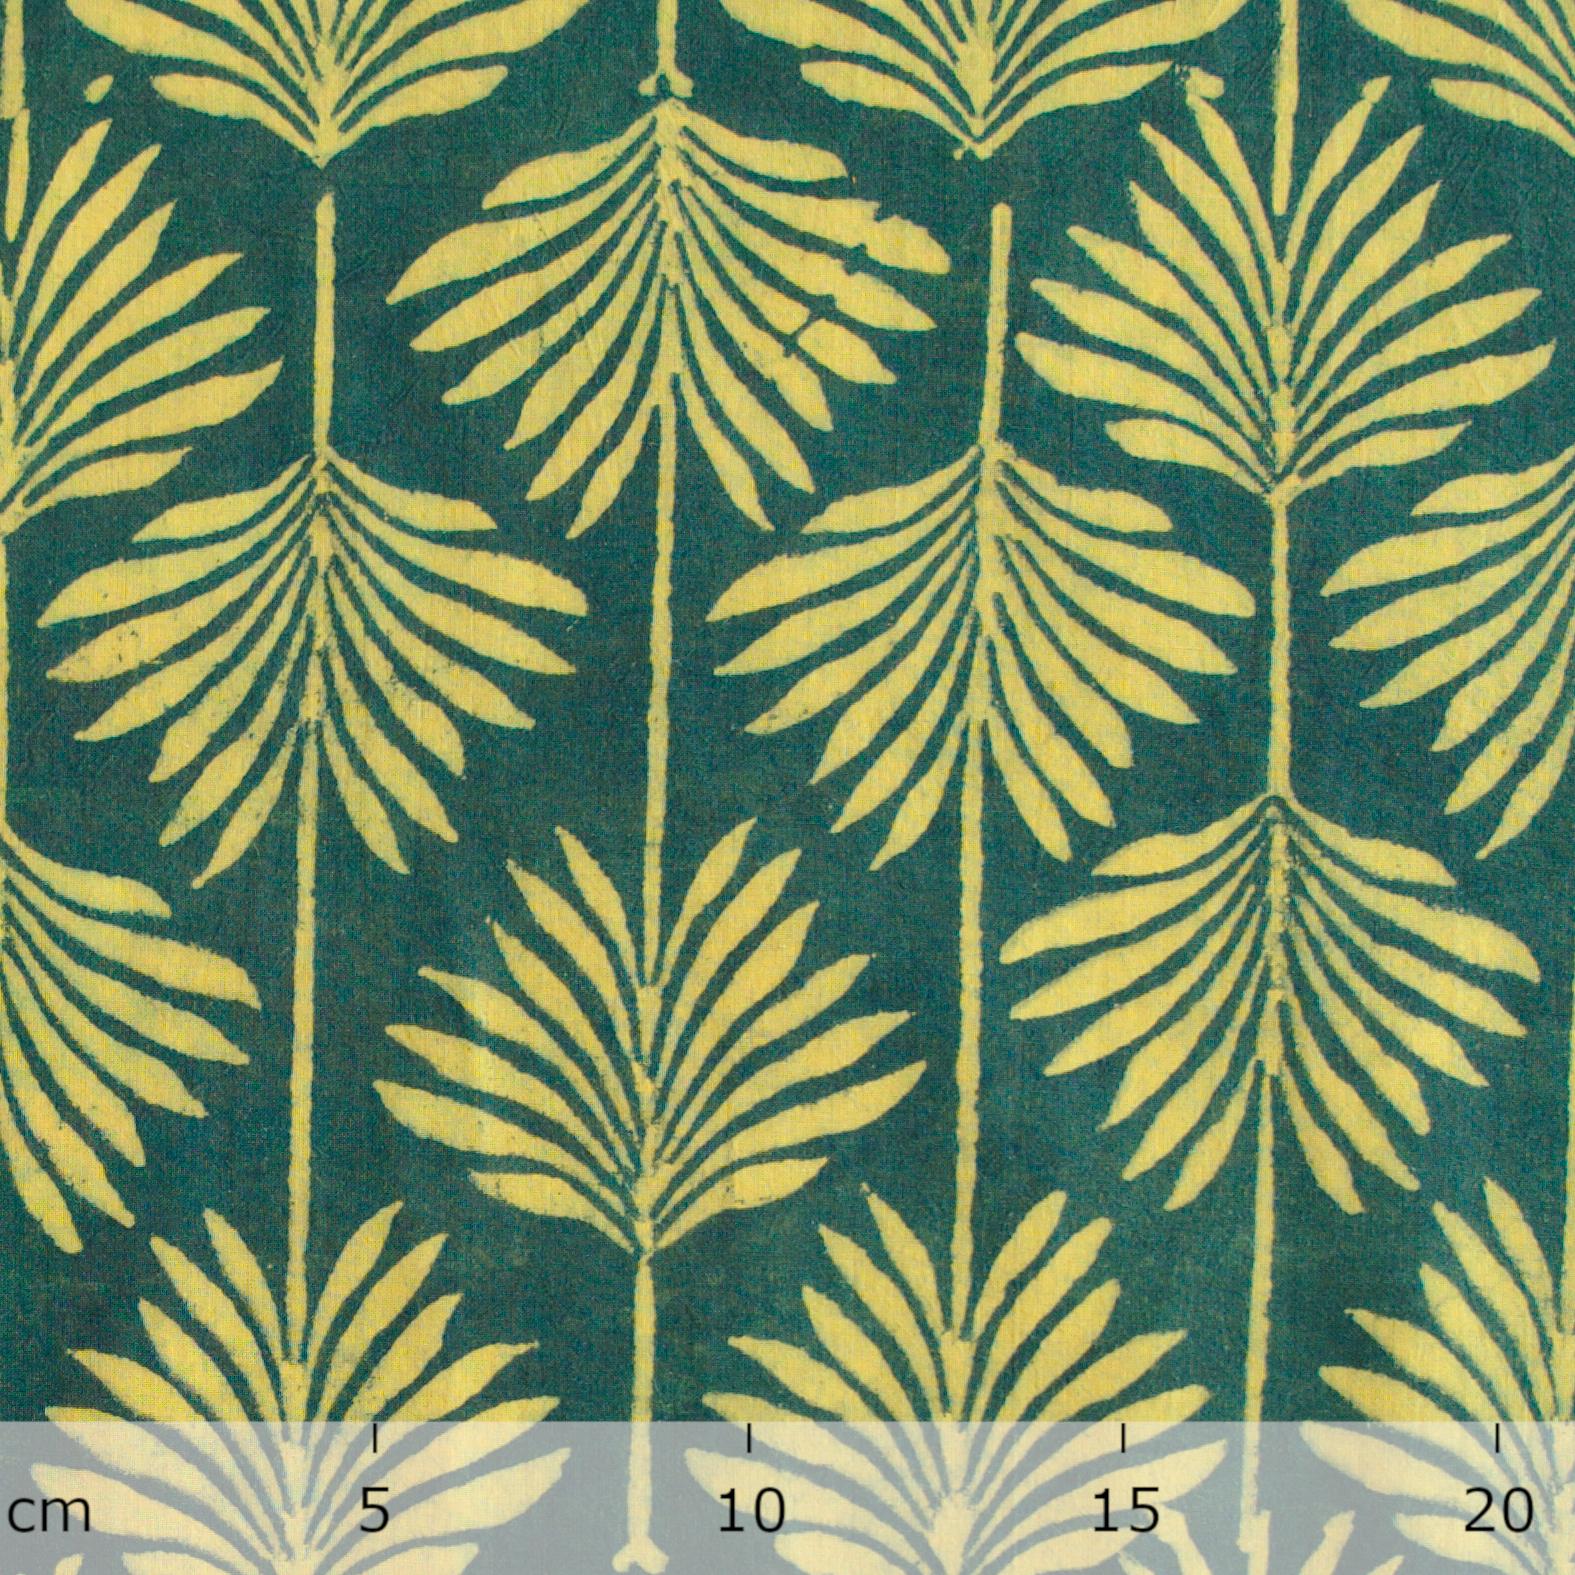 5 - SIK48 - Hand Block-Printed Cotton - Negril Palm Design - Green & Yellow Dye - Ruler